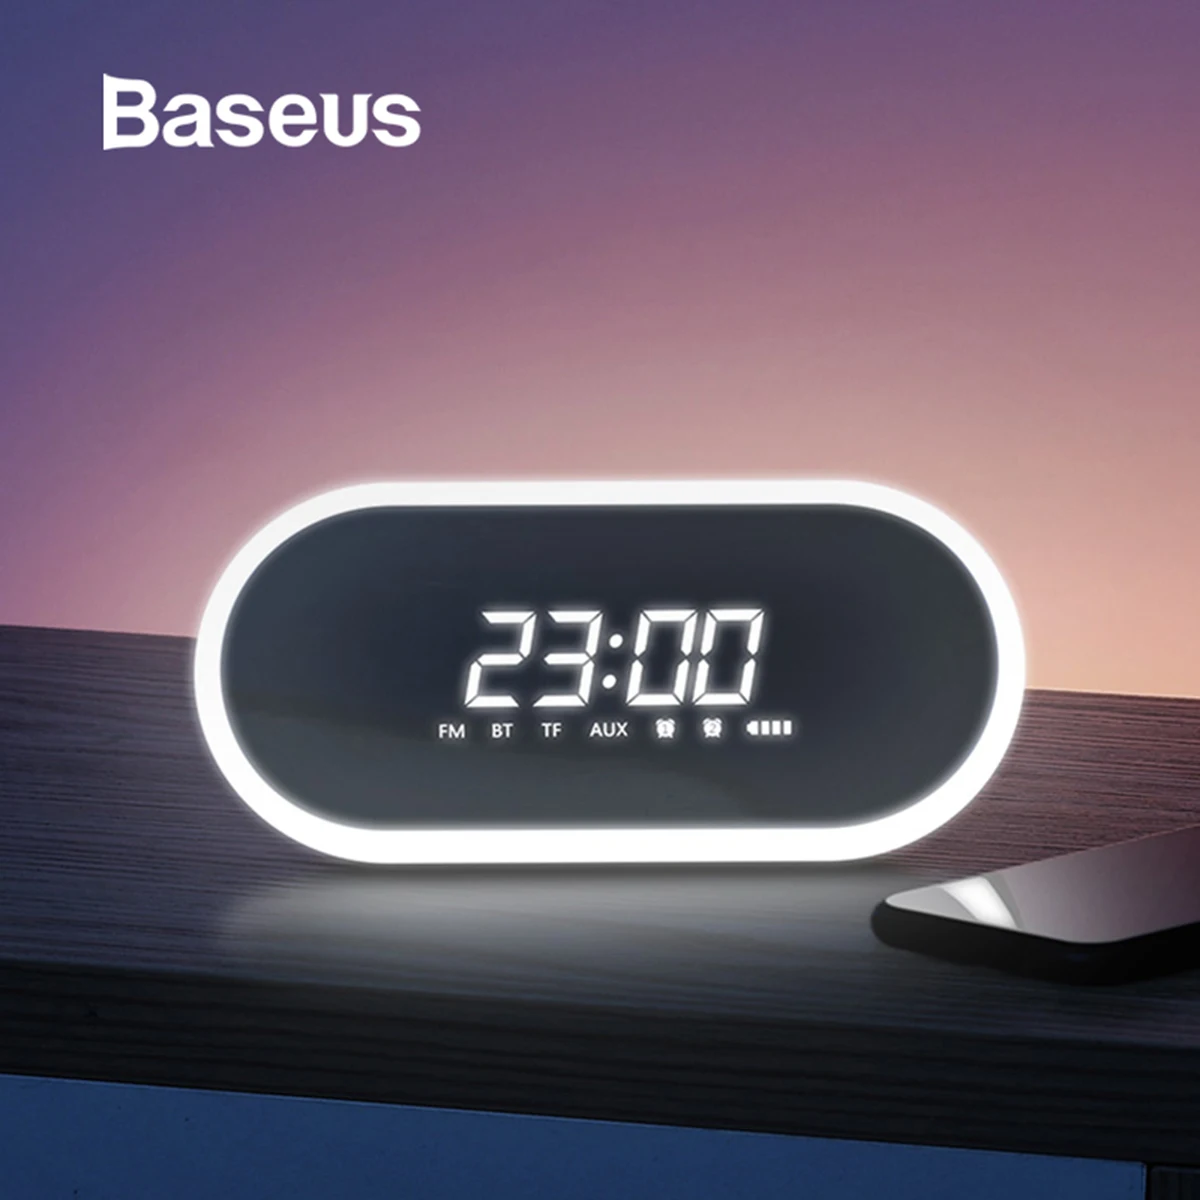 

Baseus Night light Alarm Clock bluetooth Speaker FM/TF Function Portable Wireless Loudspeaker Sound System For Bedside & Office